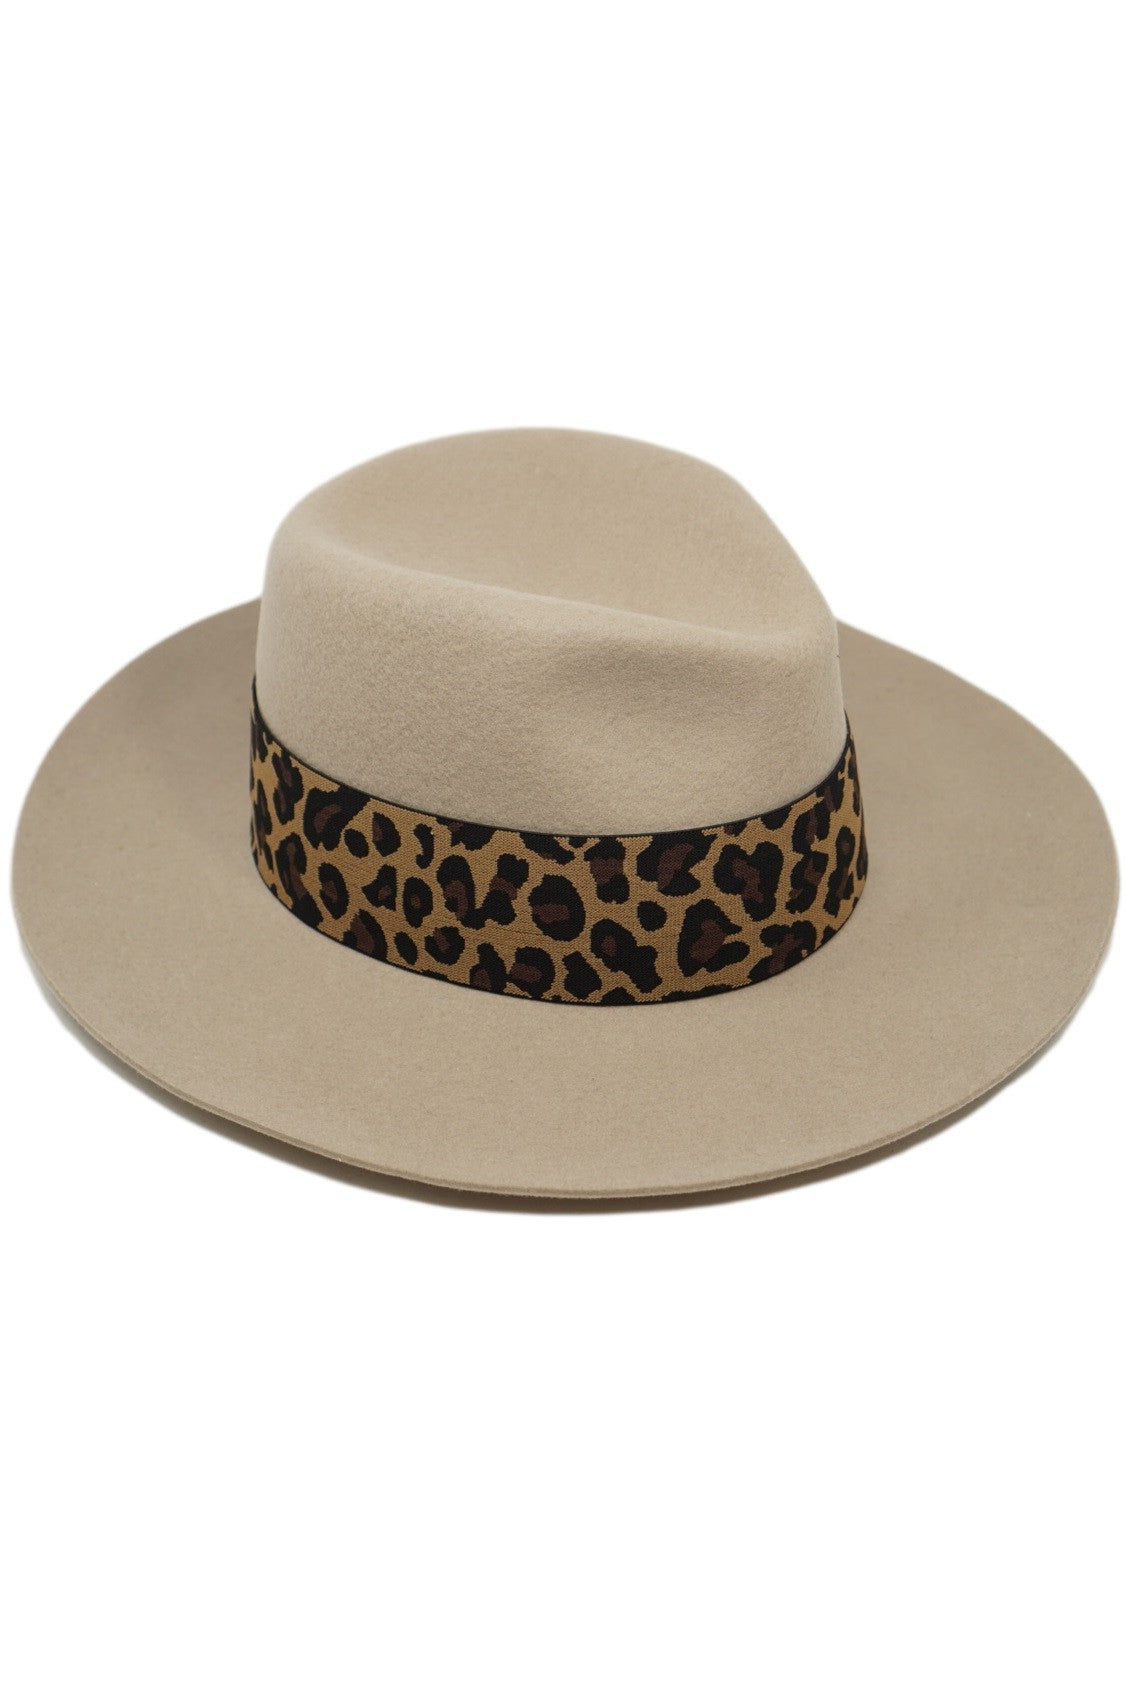 Olive & Pique Wool Felt Rancher Hat - Beige